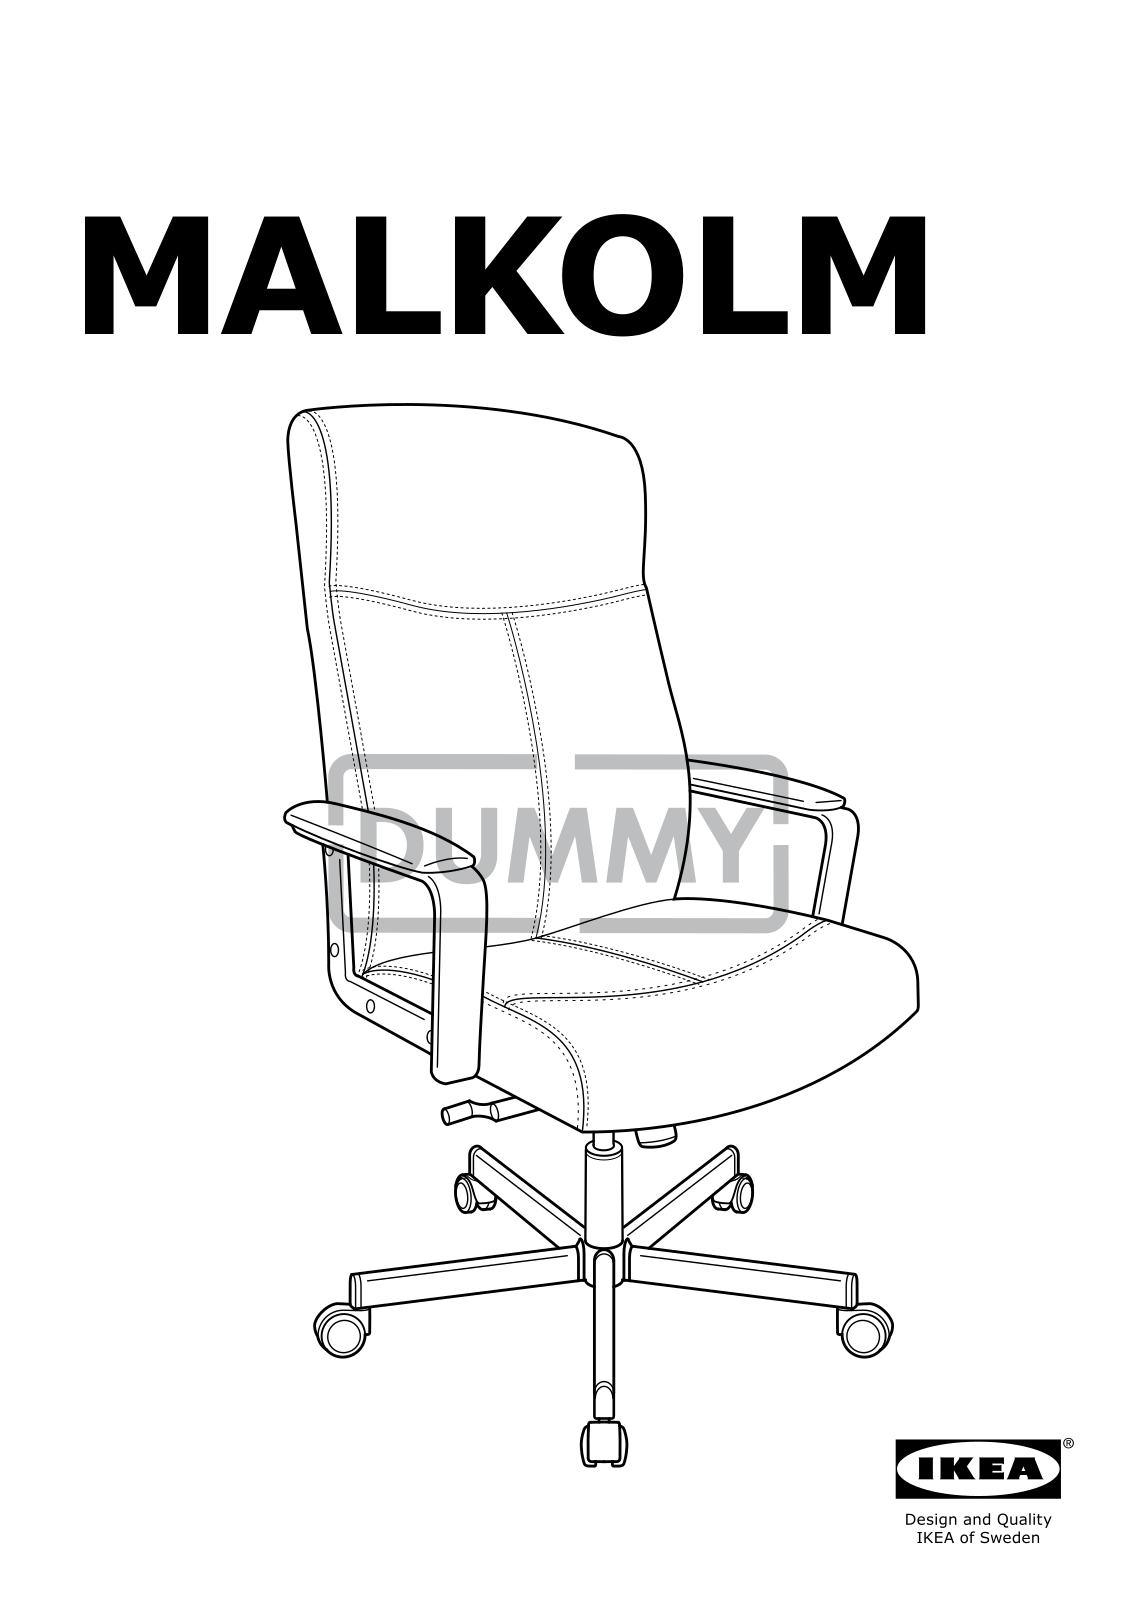 IKEA MALKOLM User Manual